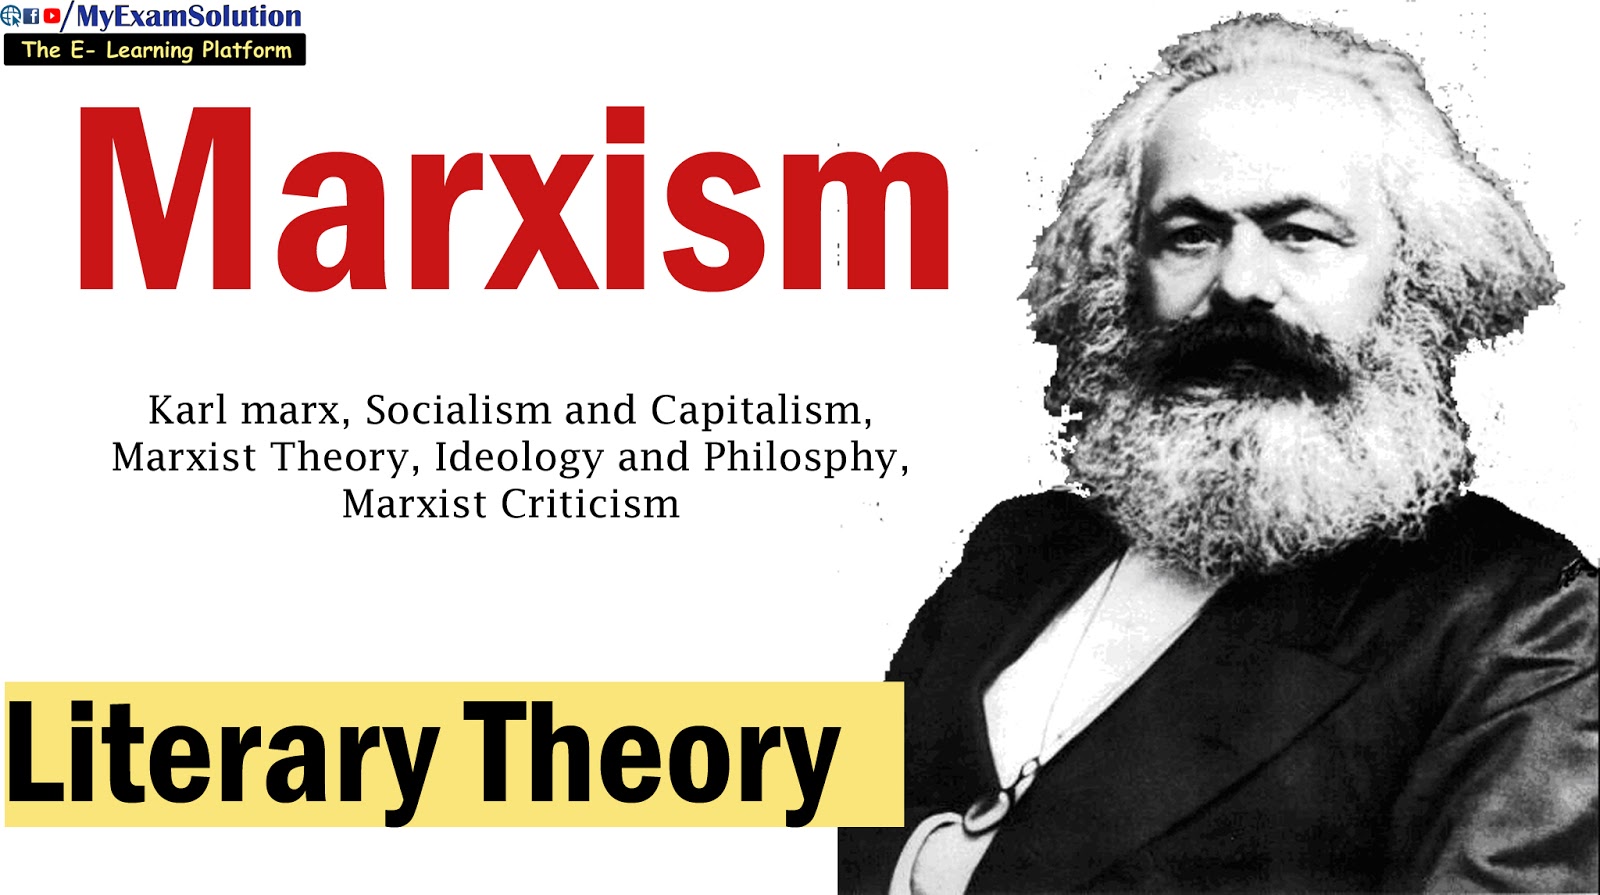 karl marx socialism theory